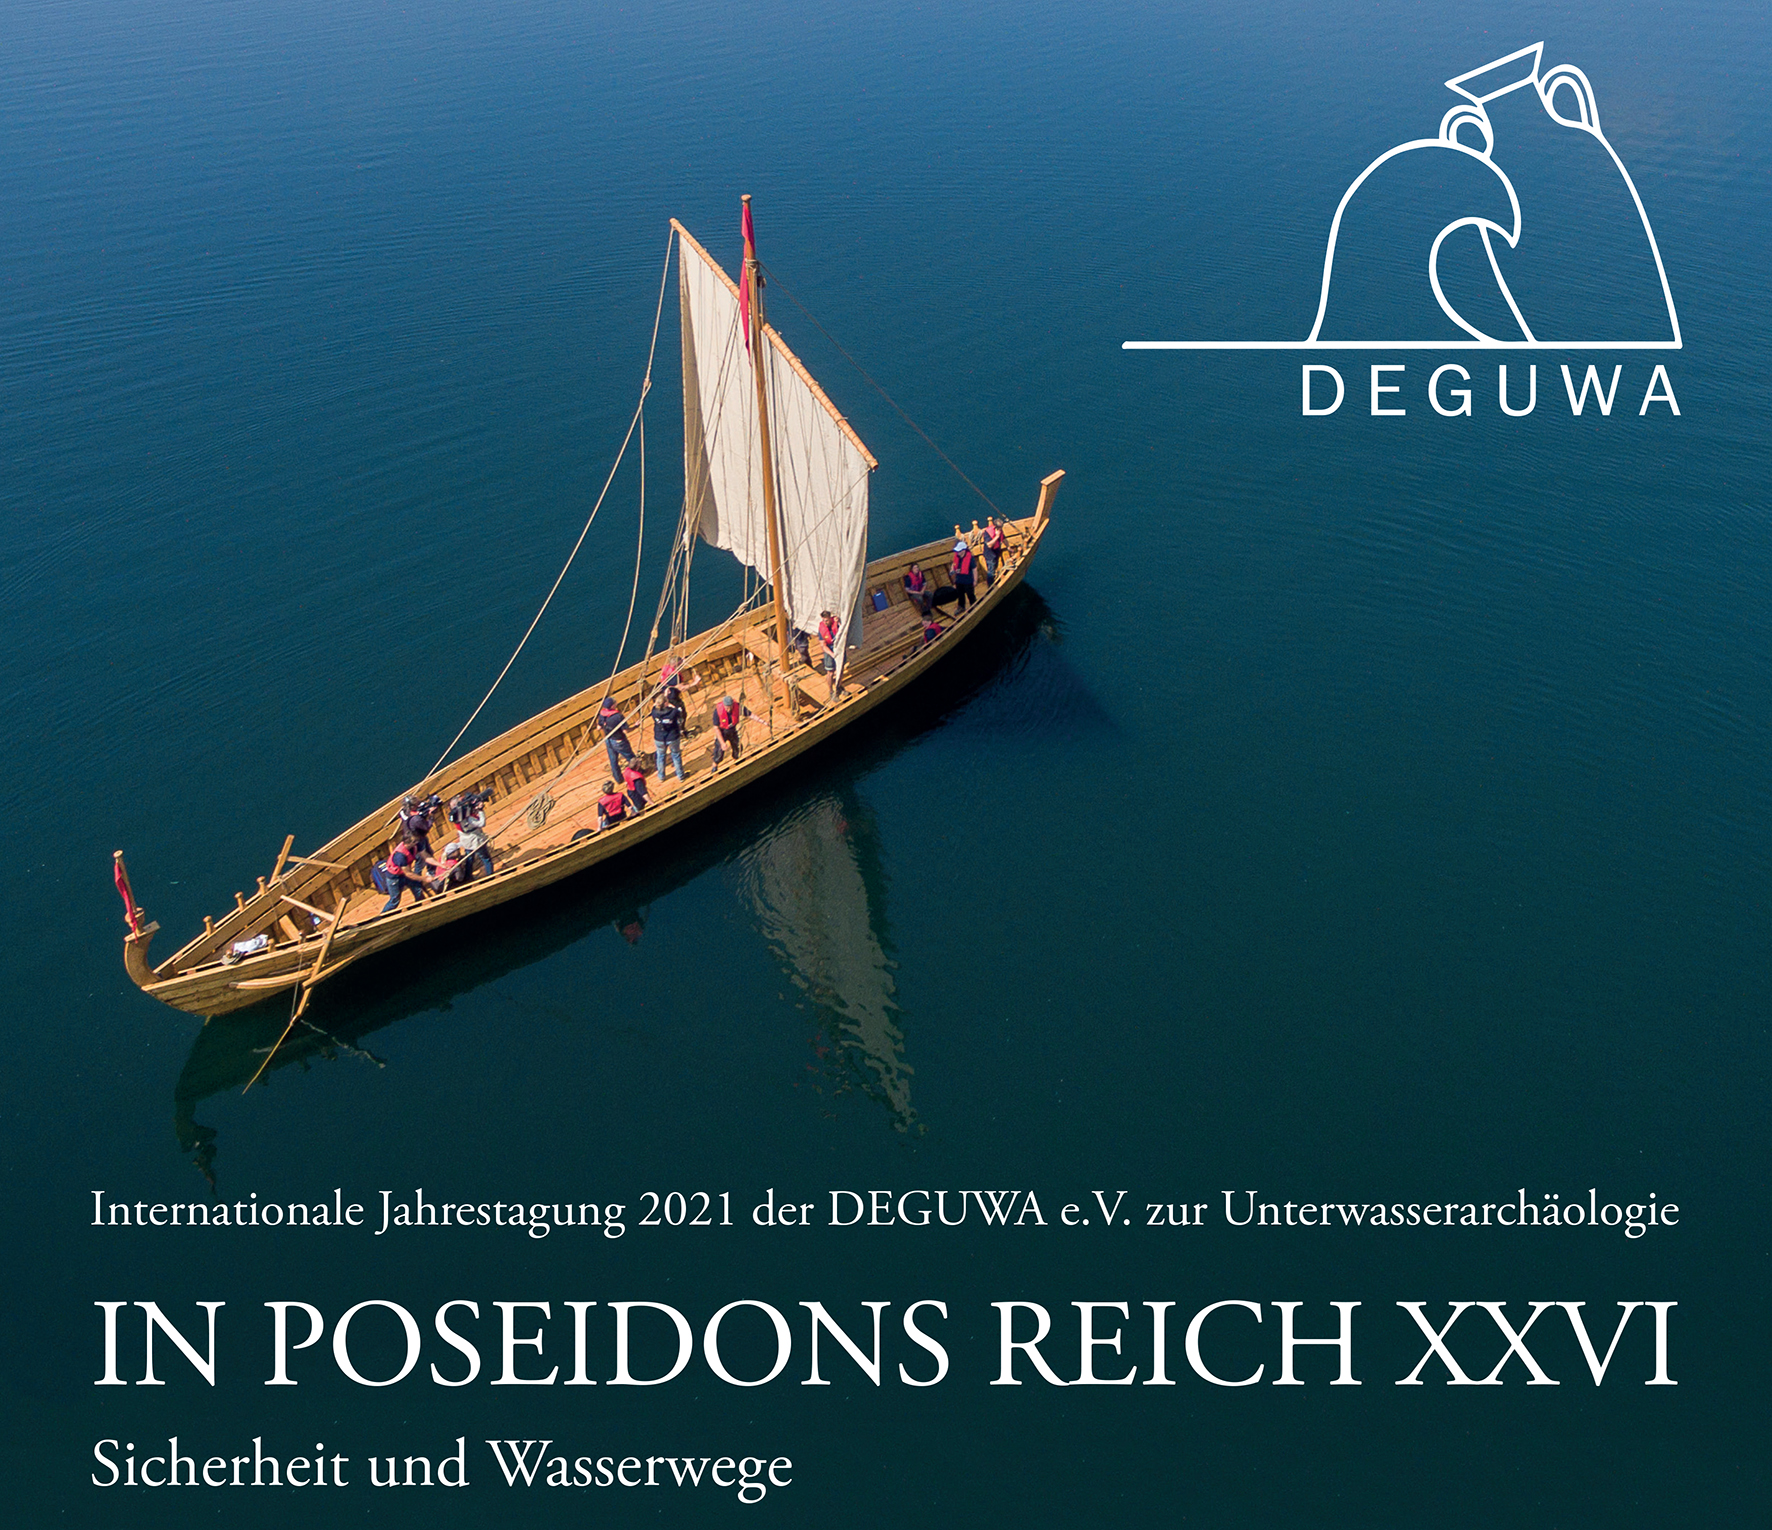 DEGUWA 2021: Underwater Archaeology Conference, in Poseidon’s Realm XXVI